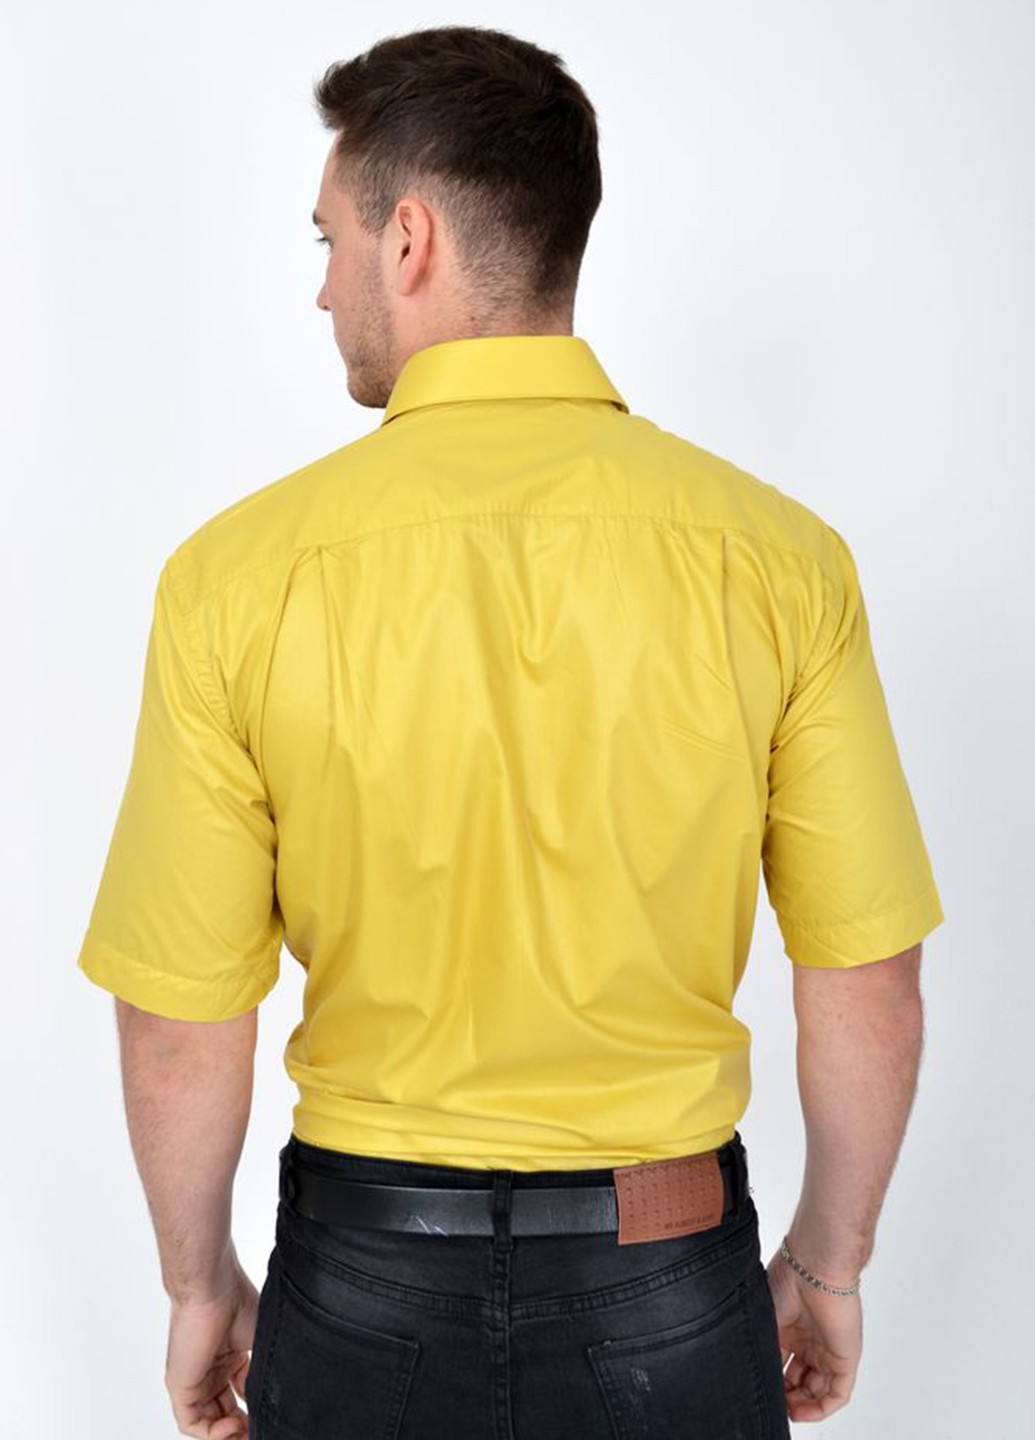 Желтая кэжуал рубашка однотонная Ager с коротким рукавом